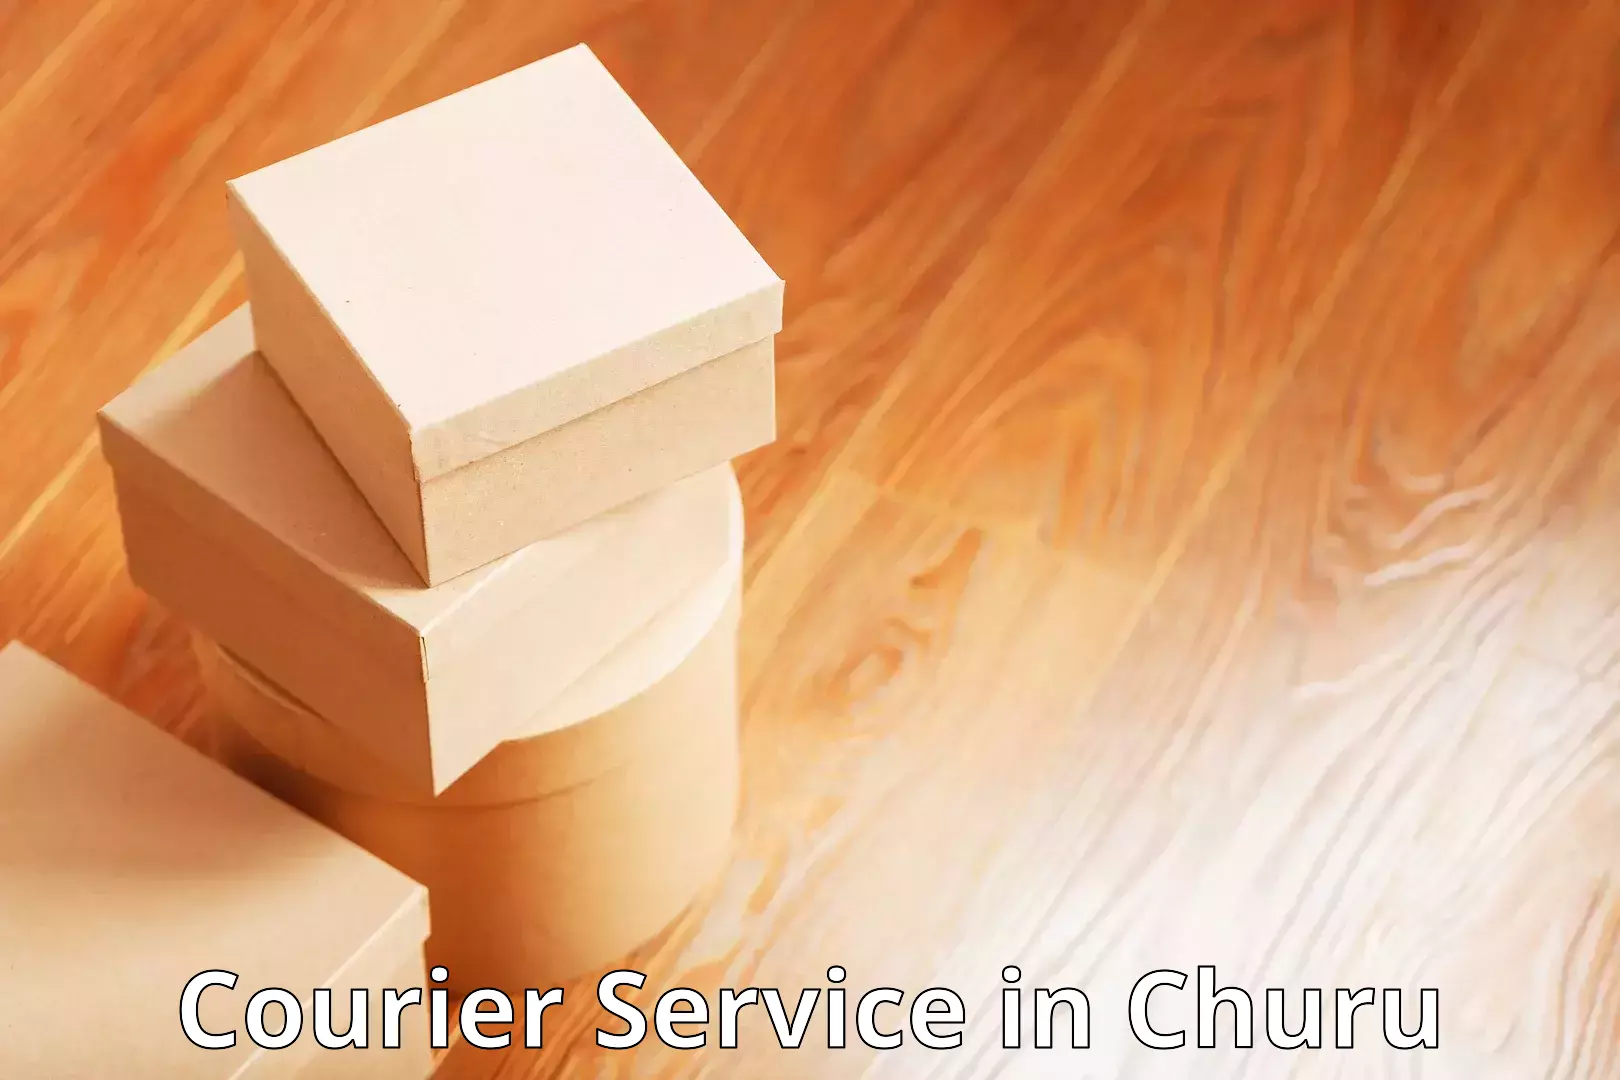 Bulk courier orders in Churu